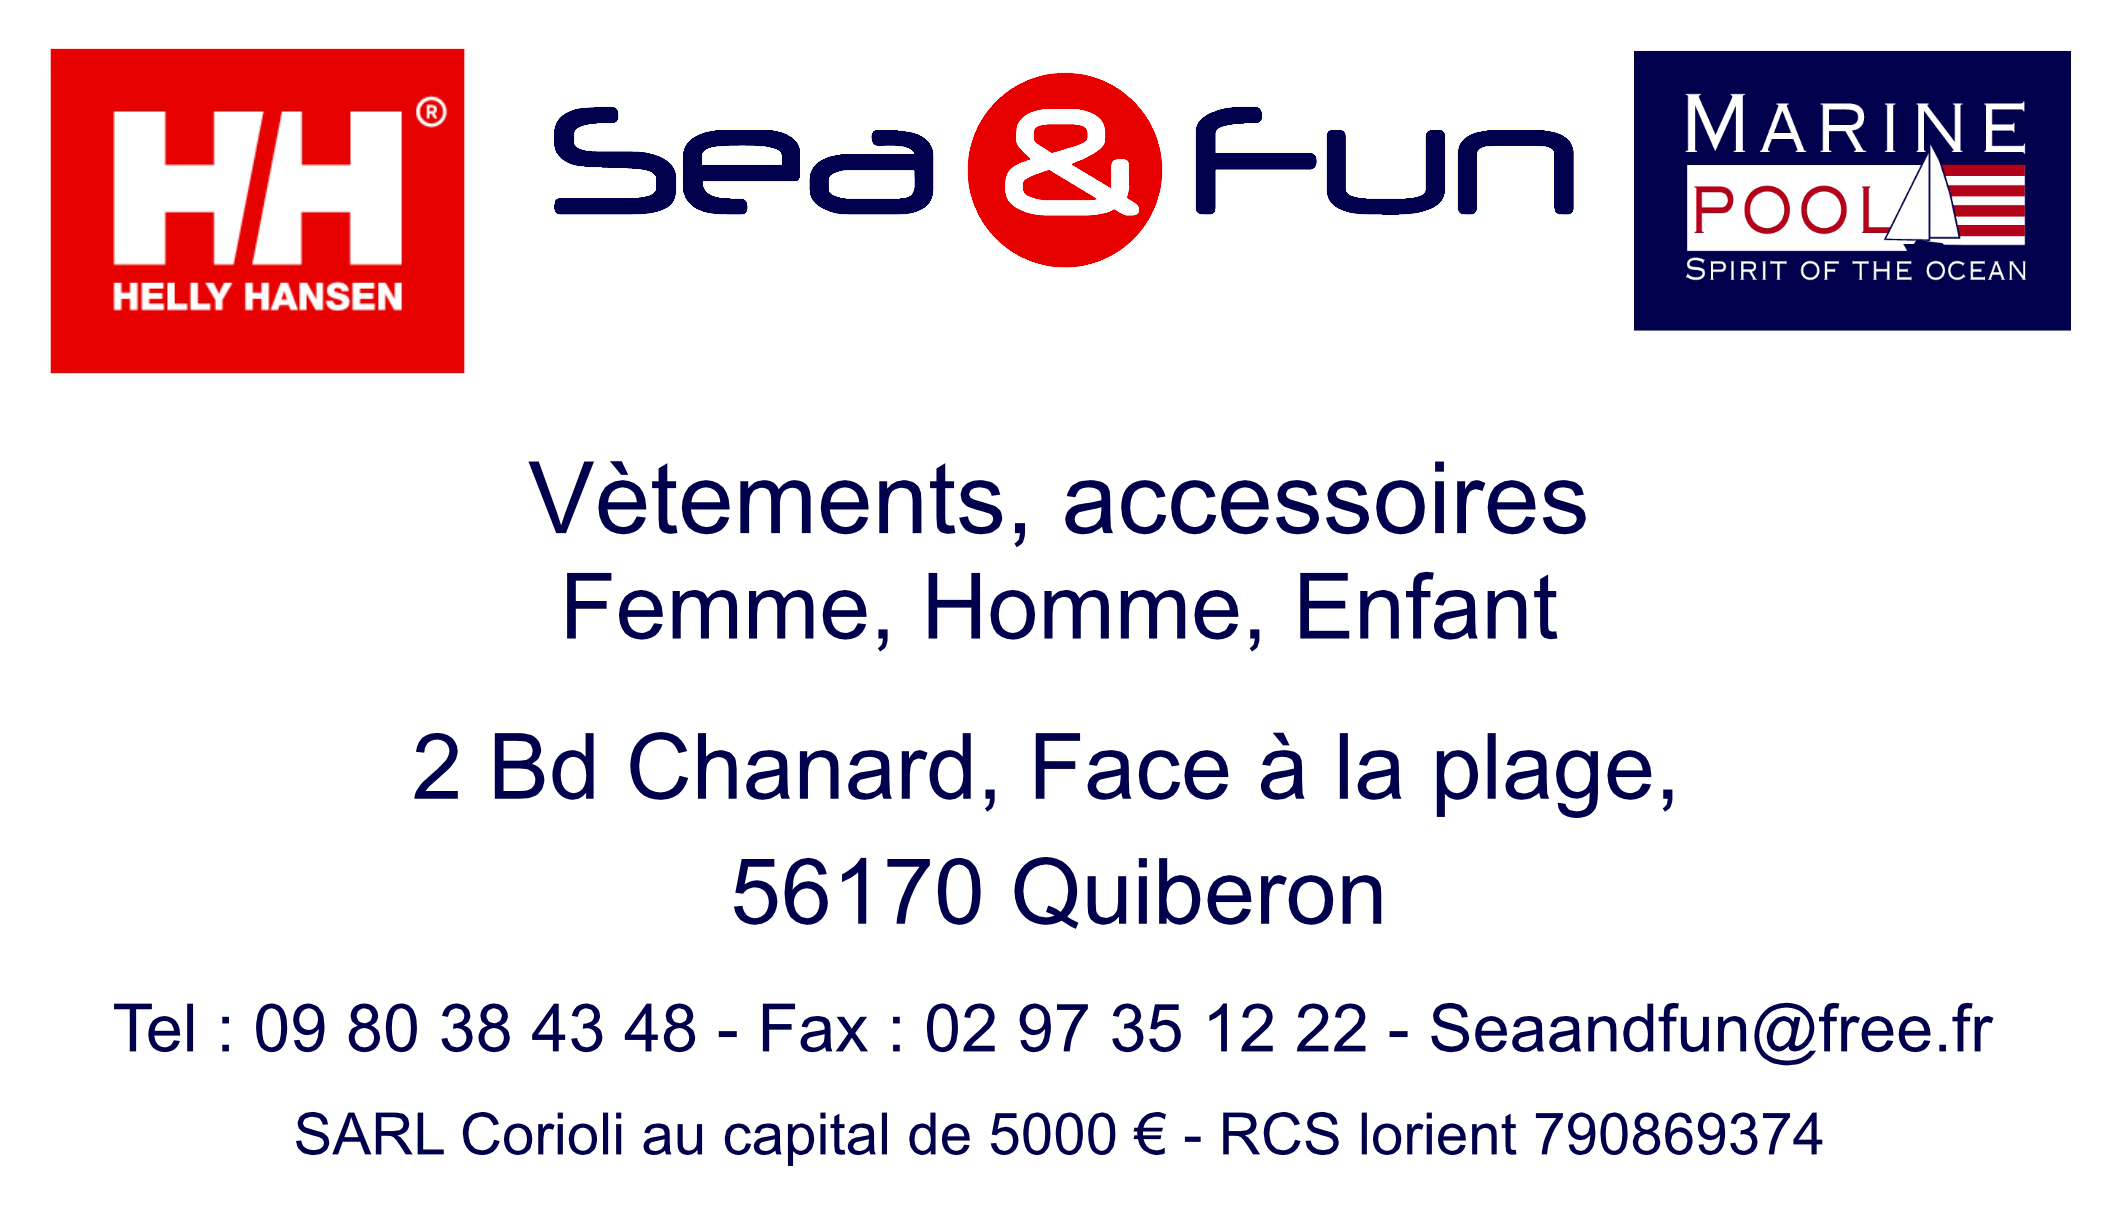 Sea And Fun, 2 Bd Chanard, 56170 Quiberon - Tel : 09 80 38 43 48